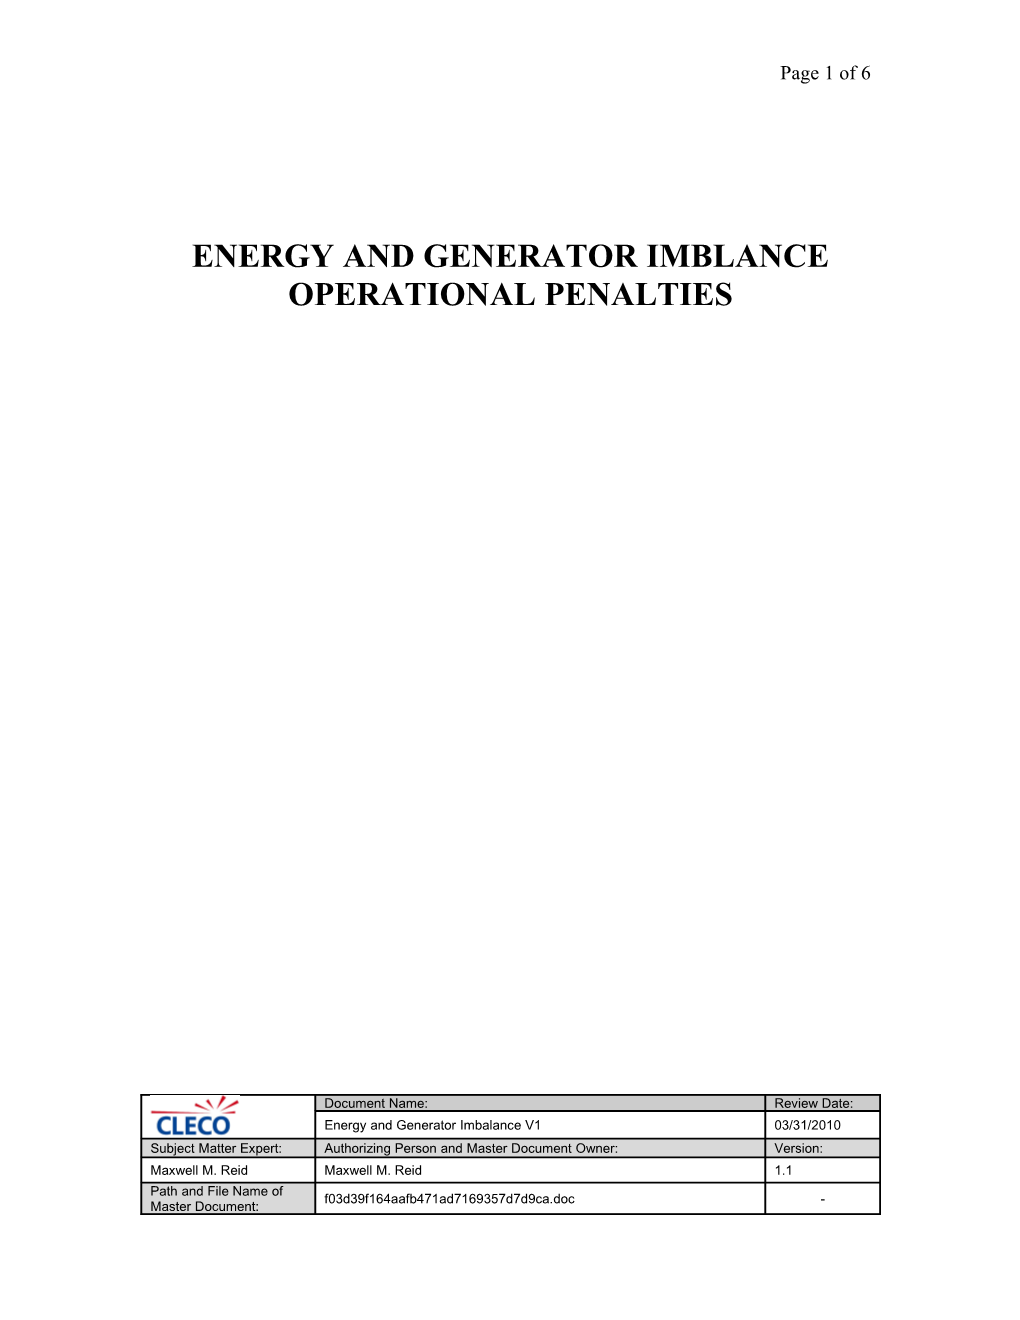 Energy and Generator Imblance Operational Penalties